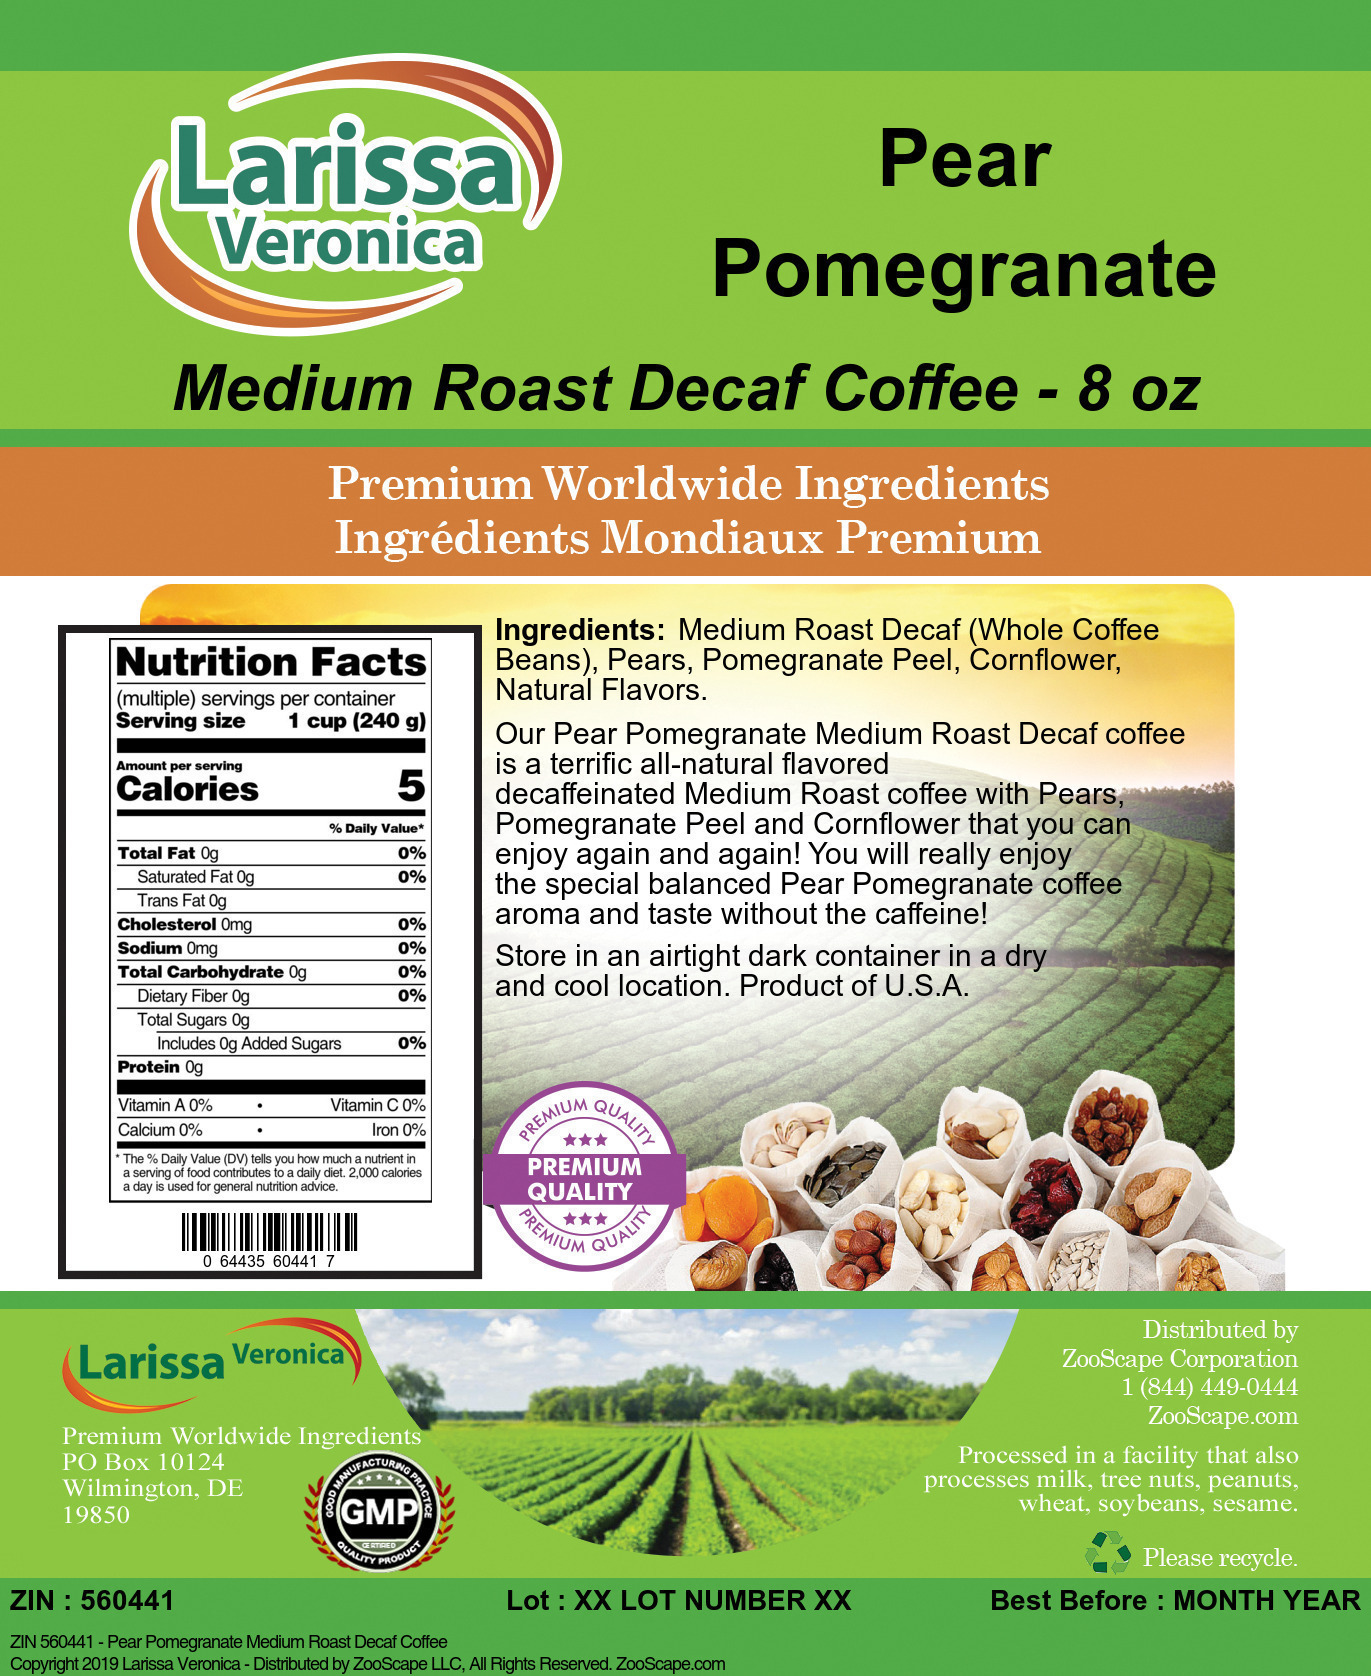 Pear Pomegranate Medium Roast Decaf Coffee - Label